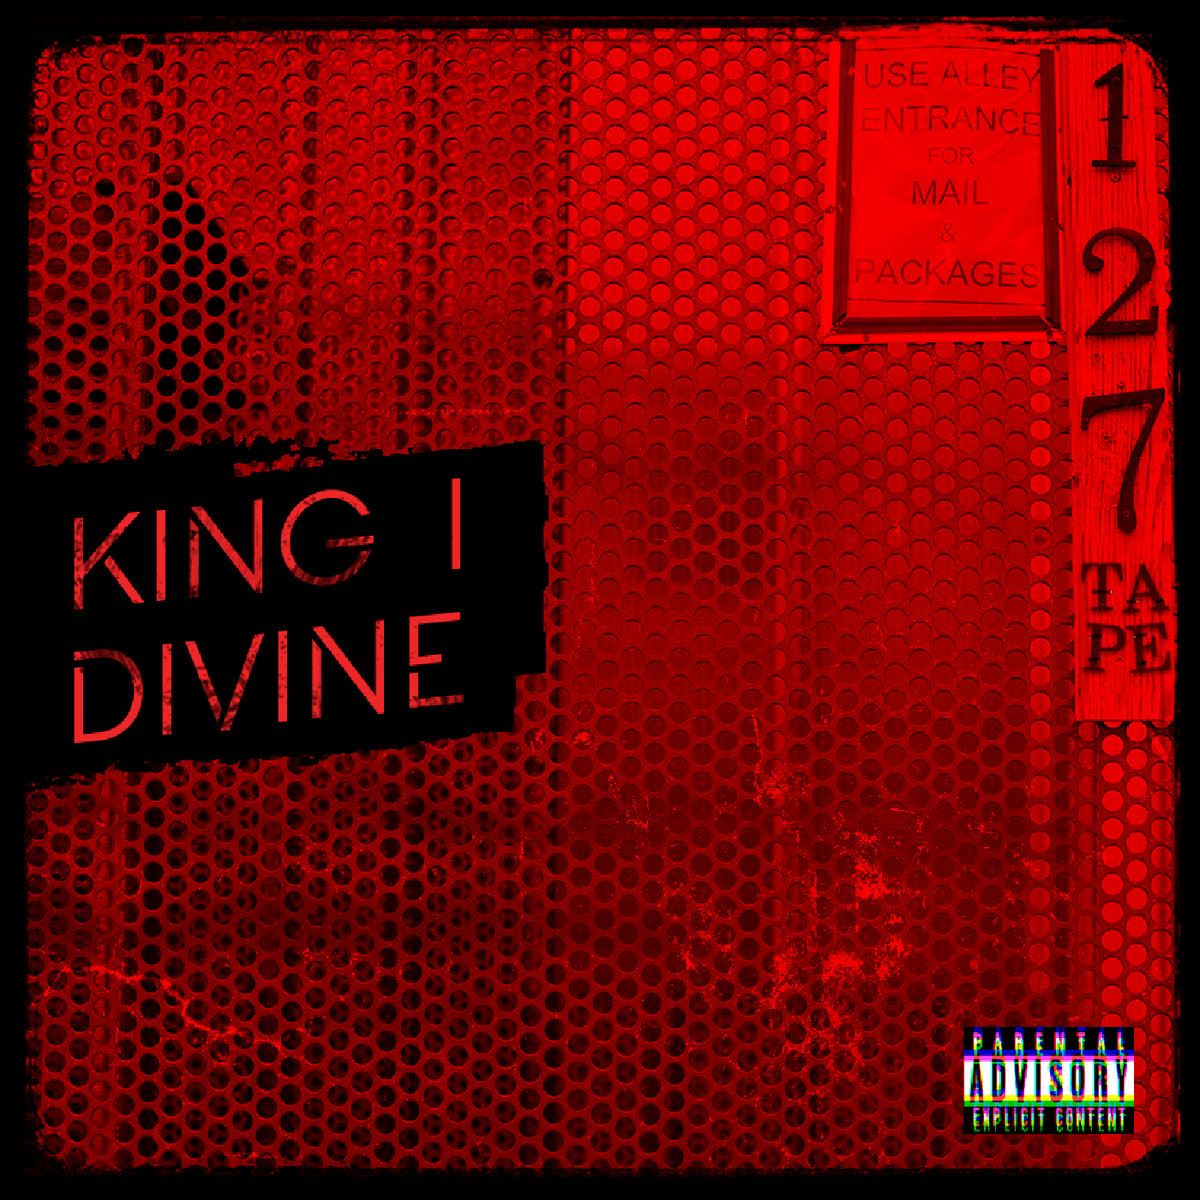 King I Divine Releases ‘127 Tape’ (STREAM)